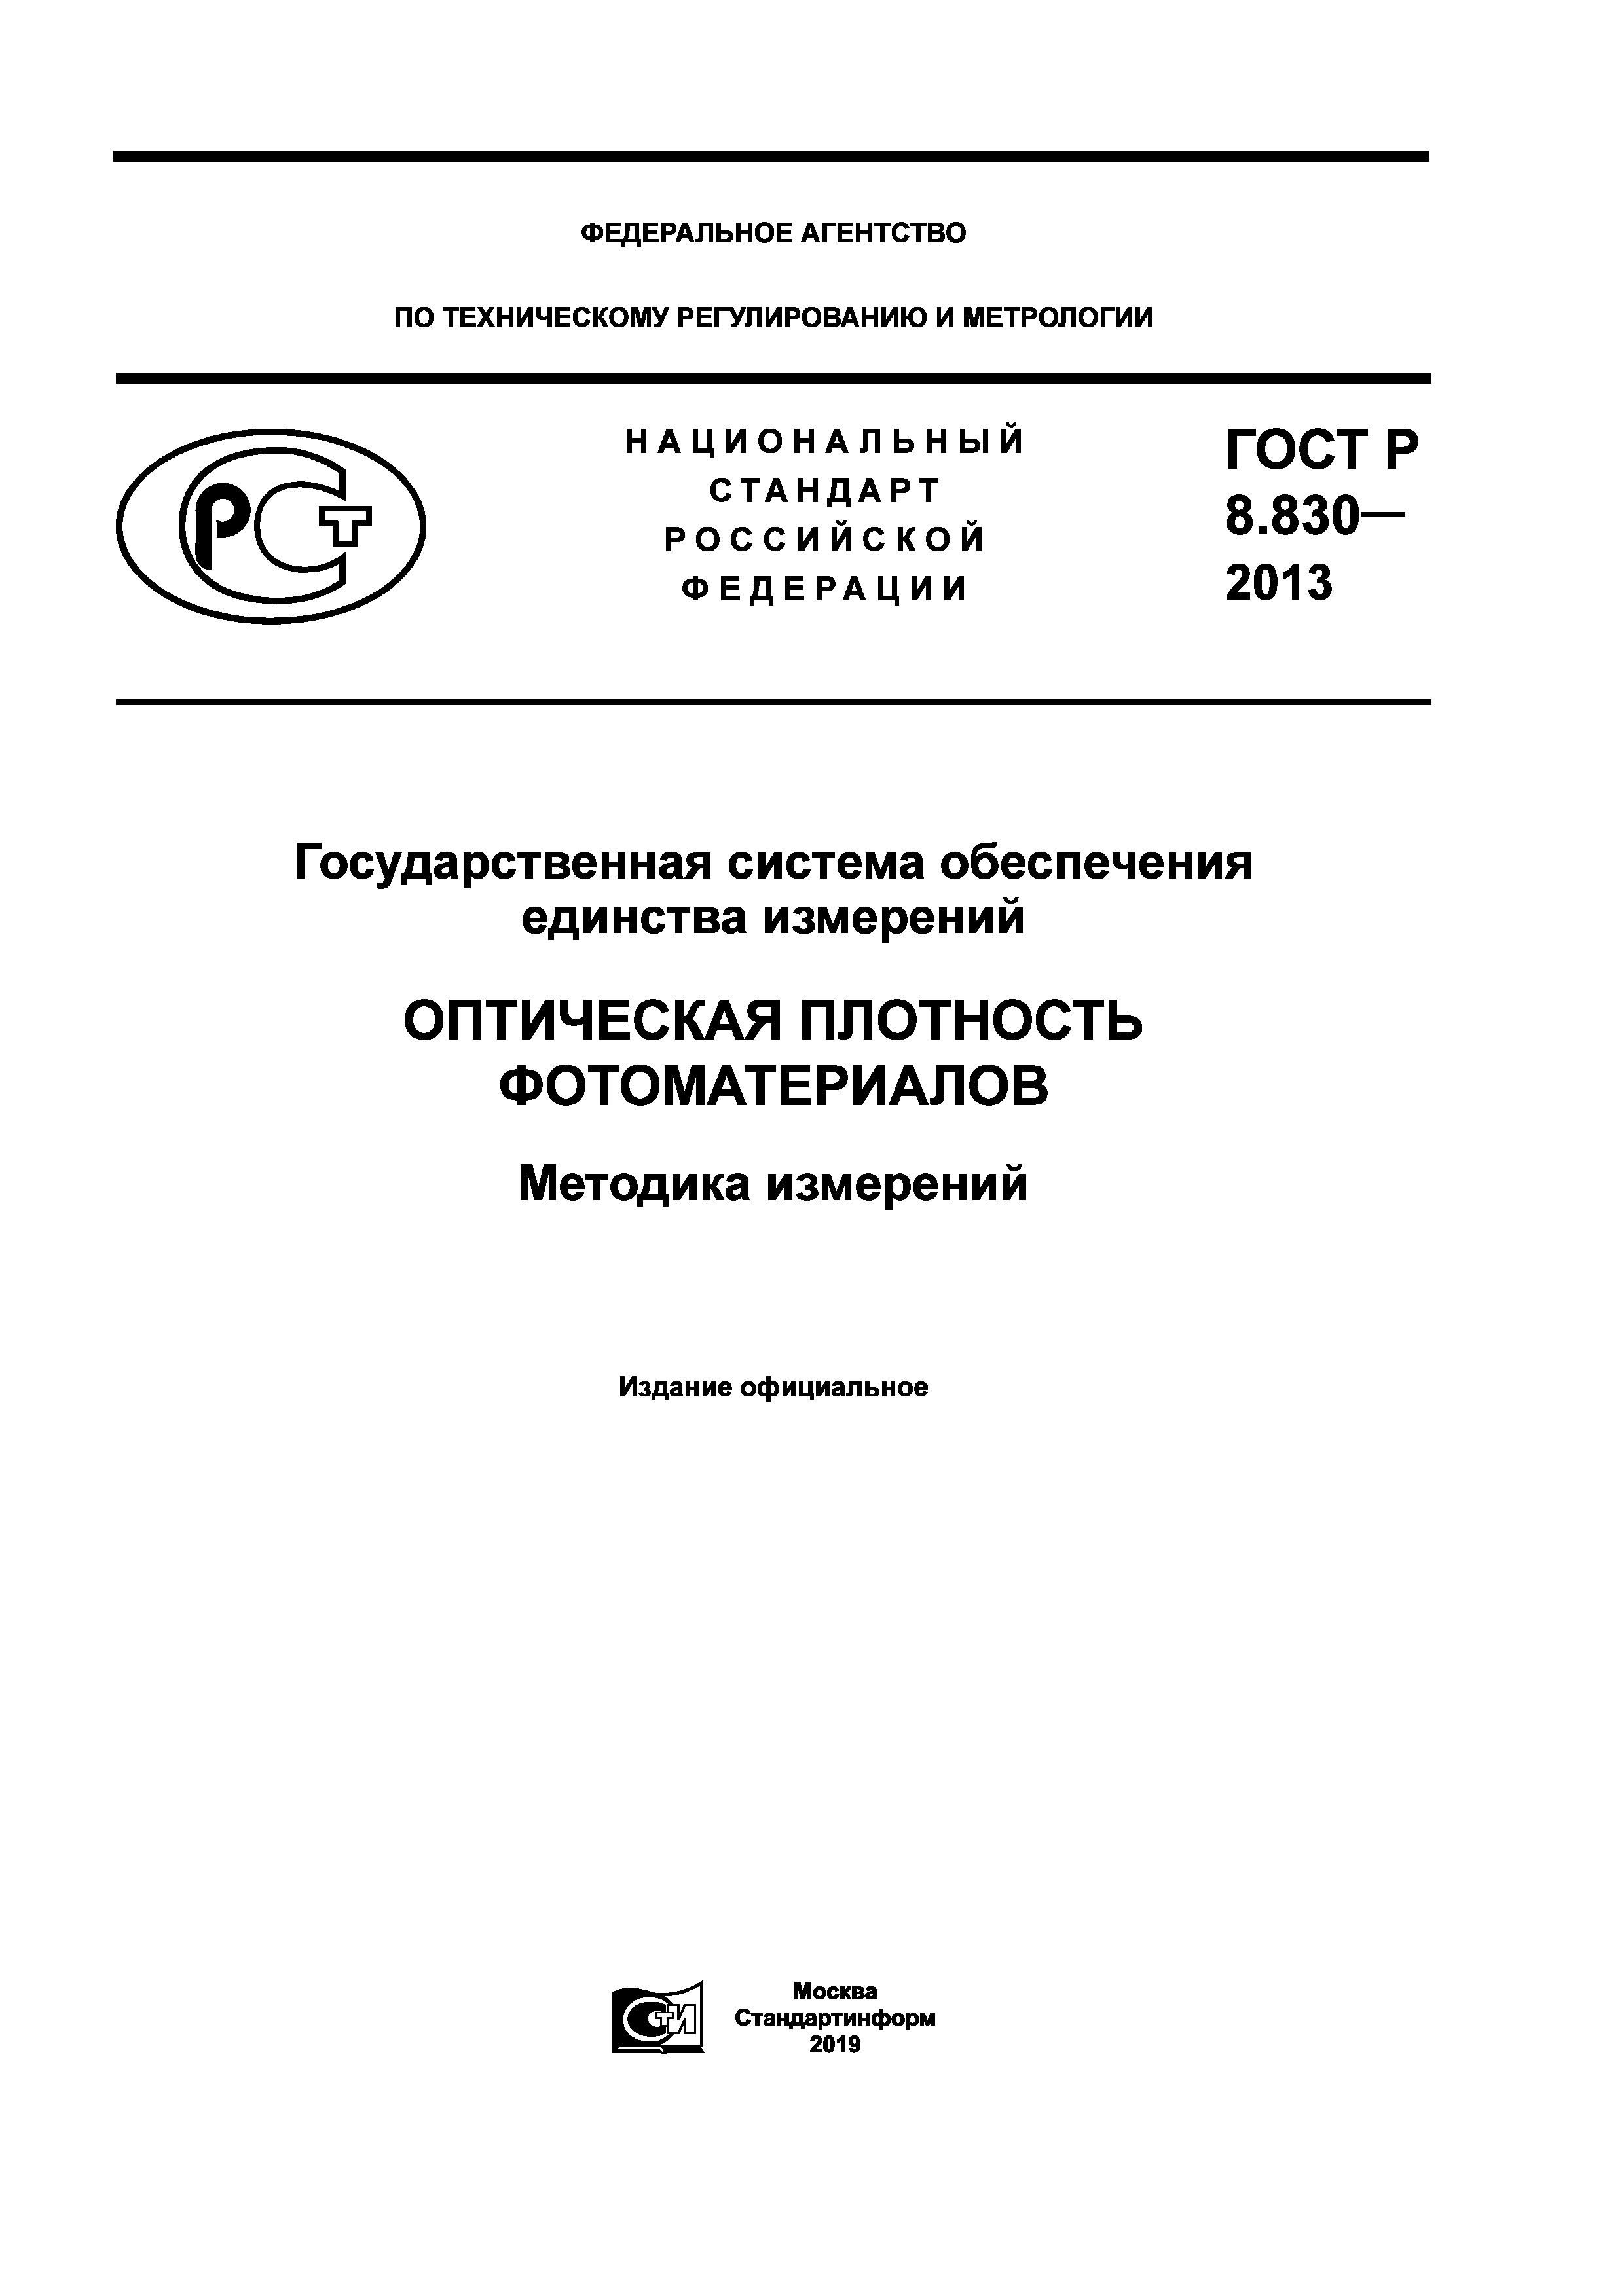 ГОСТ Р 8.830-2013